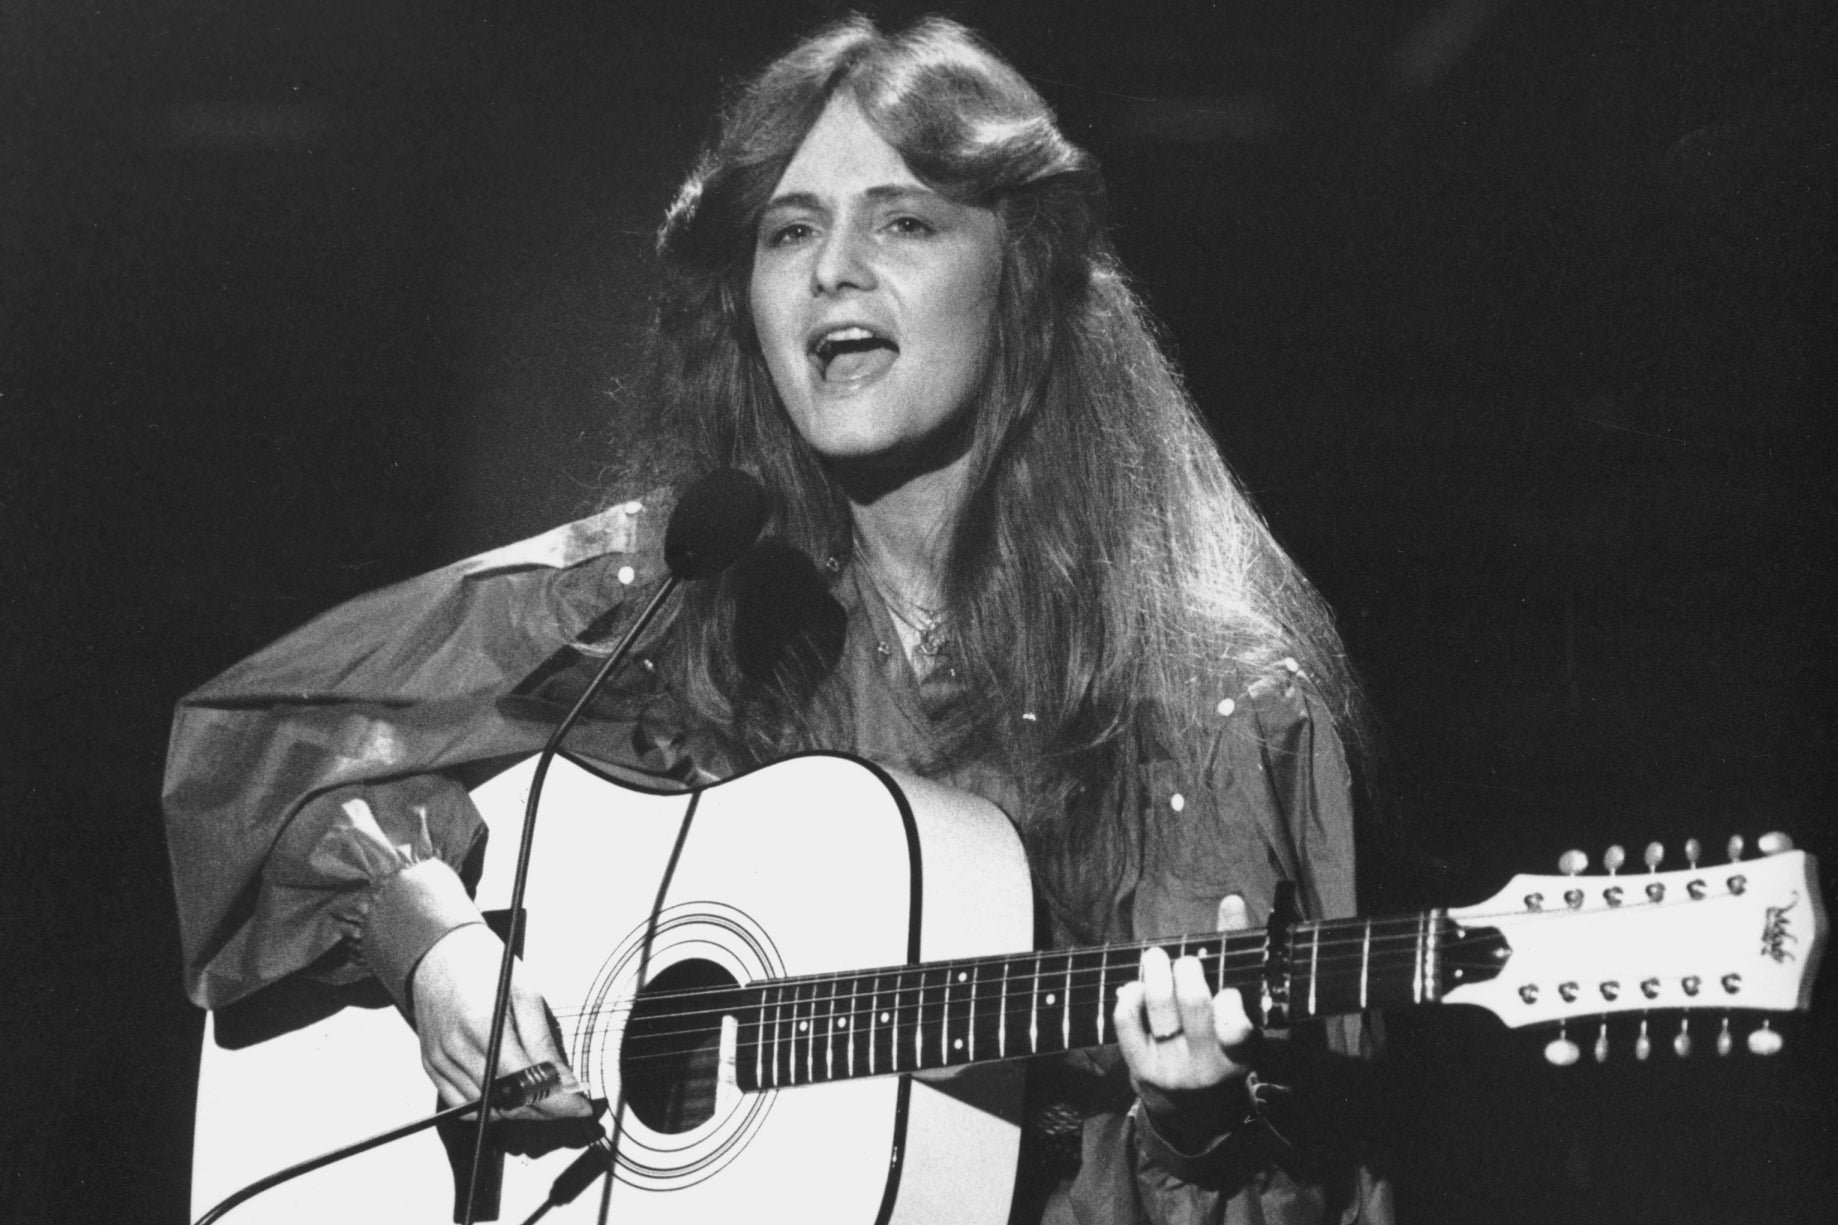 Nicole sings for Germany in 1982